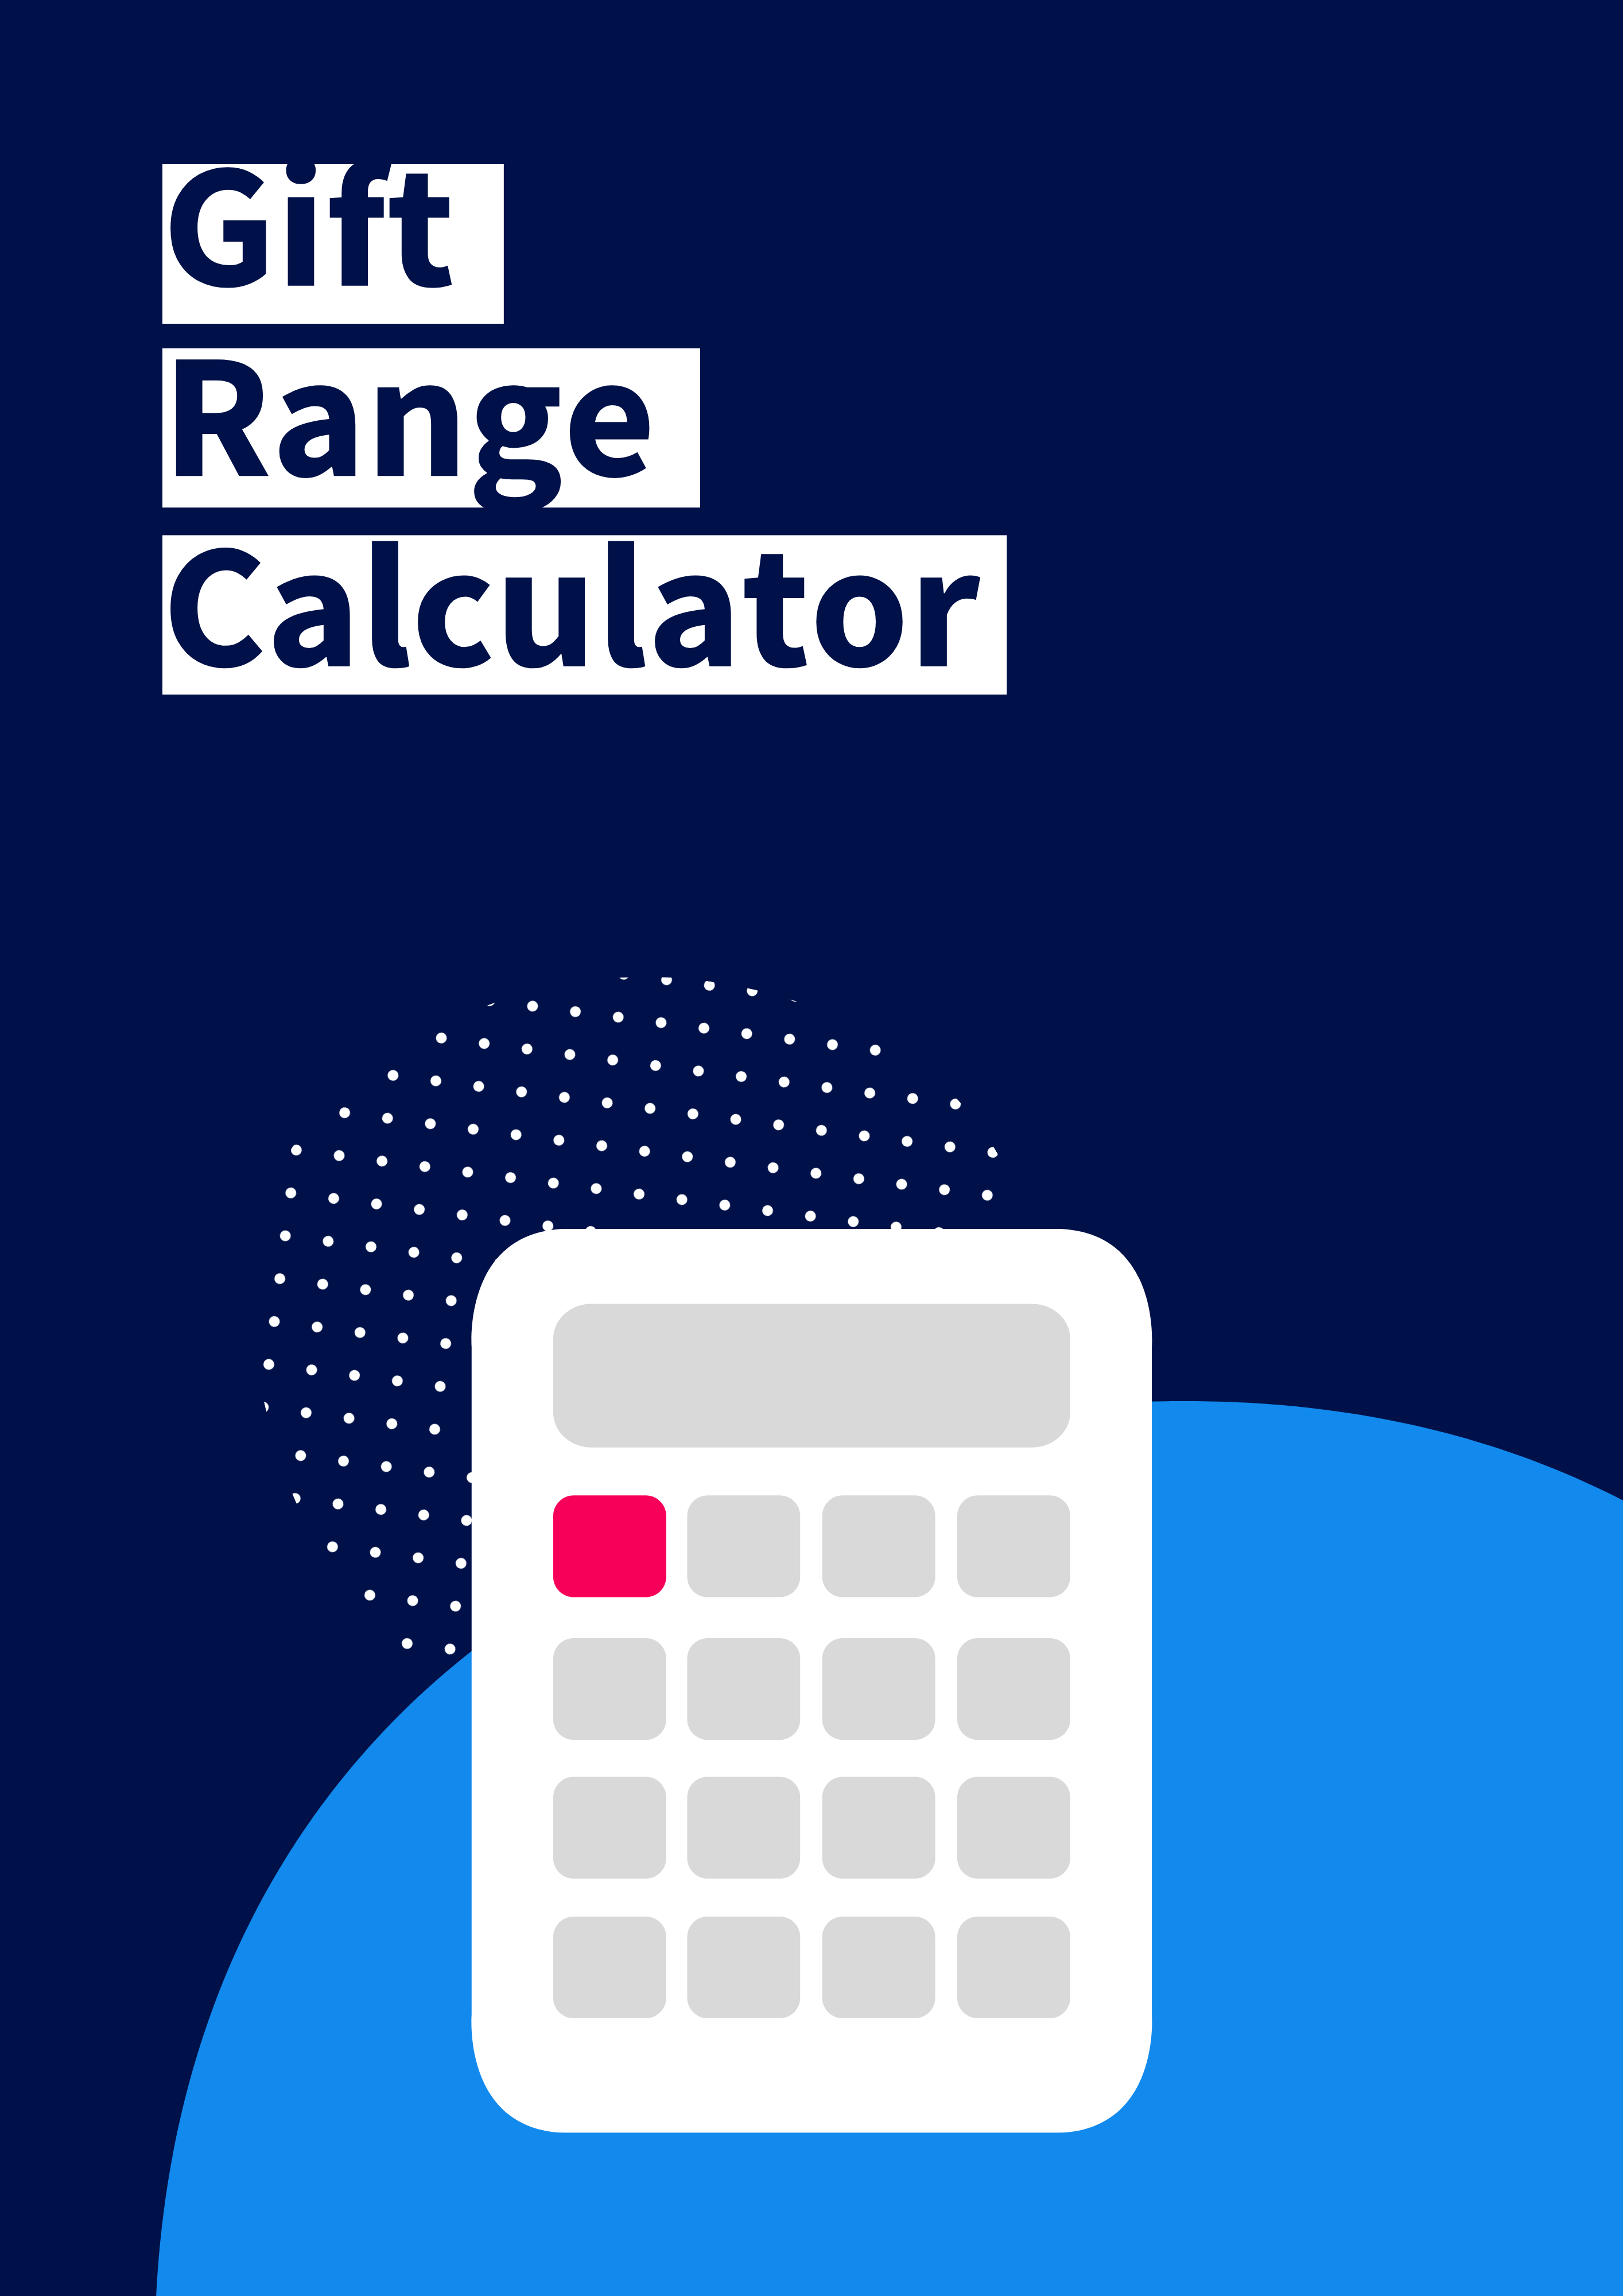 Gift Range Calculator